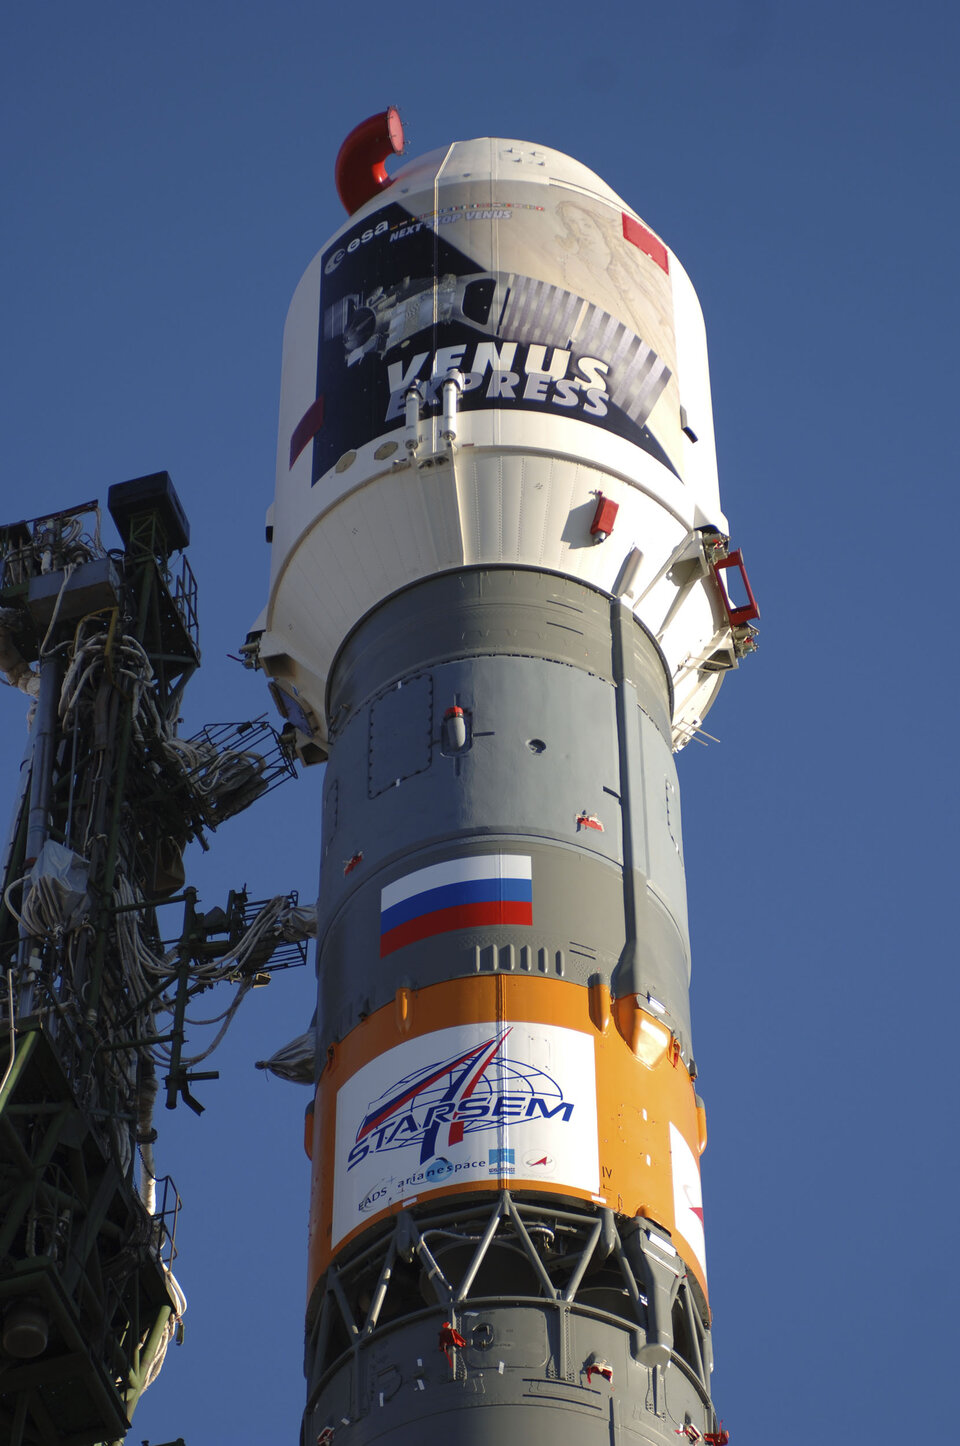 Venus Express atop the Soyuz-Fregat